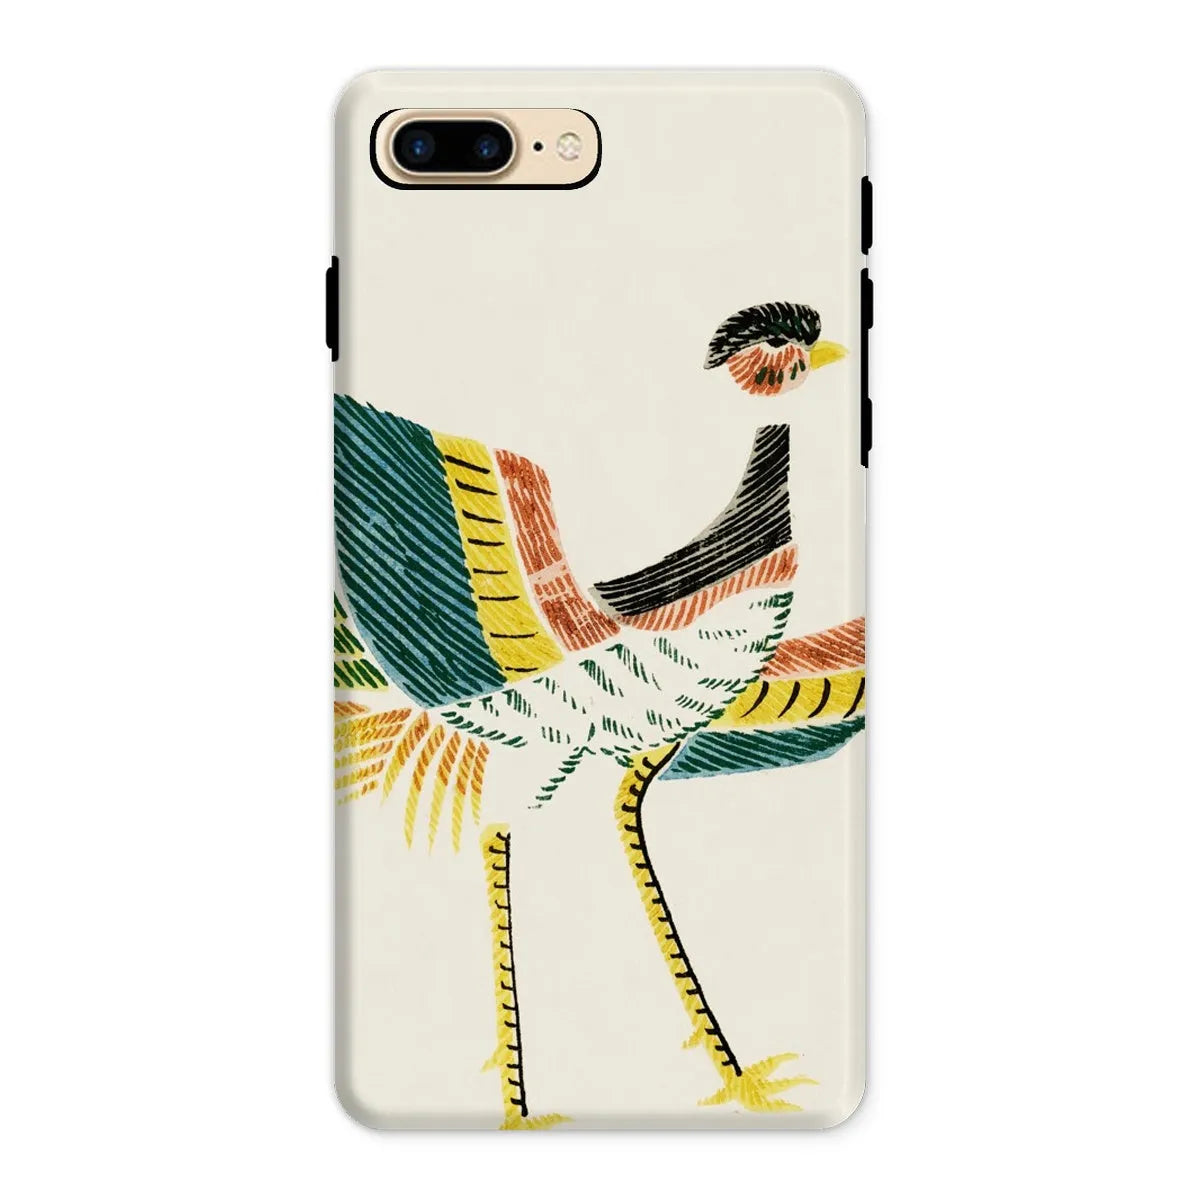 Woodblock Crane - Japanese Bird Phone Case - Taguchi Tomoki - Iphone 8 Plus / Matte - Mobile Phone Cases - Aesthetic Art